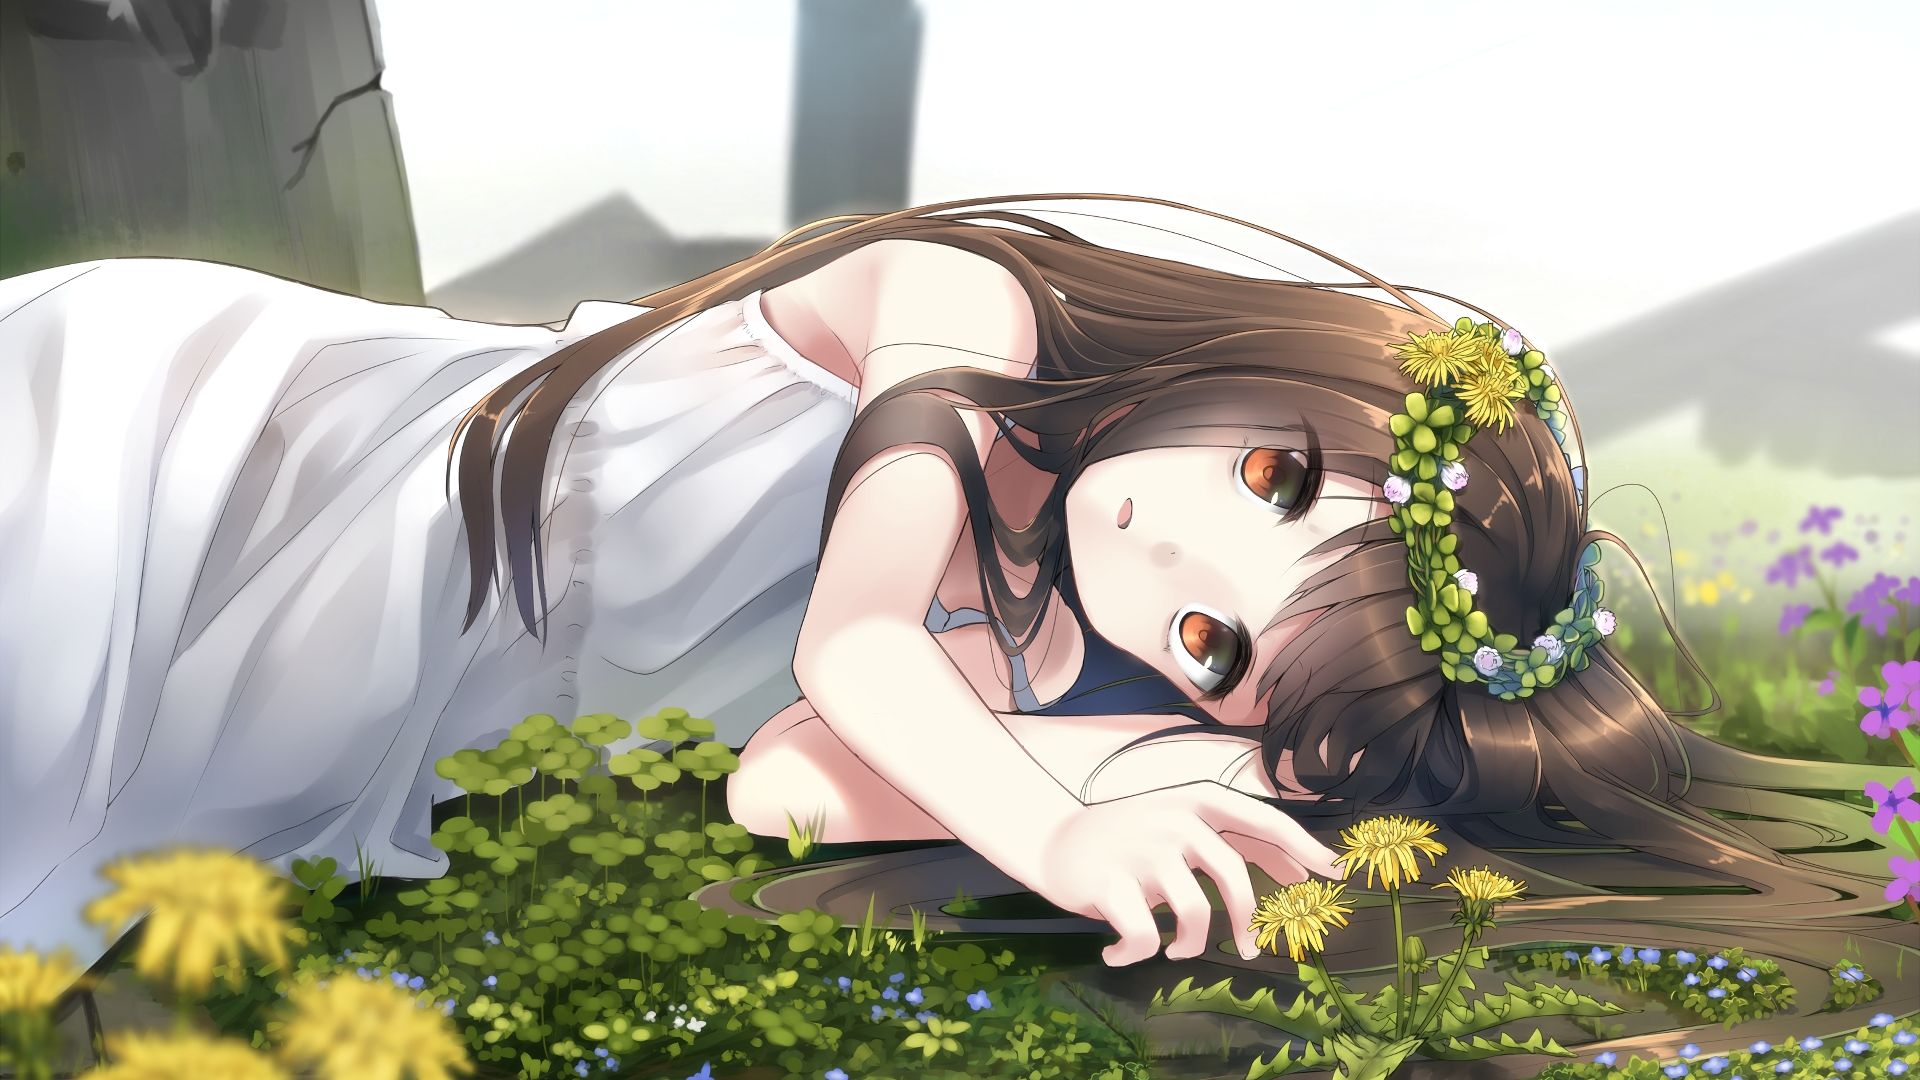 Download Sad Crying Anime Girl Lying On Water Wallpaper | Wallpapers.com